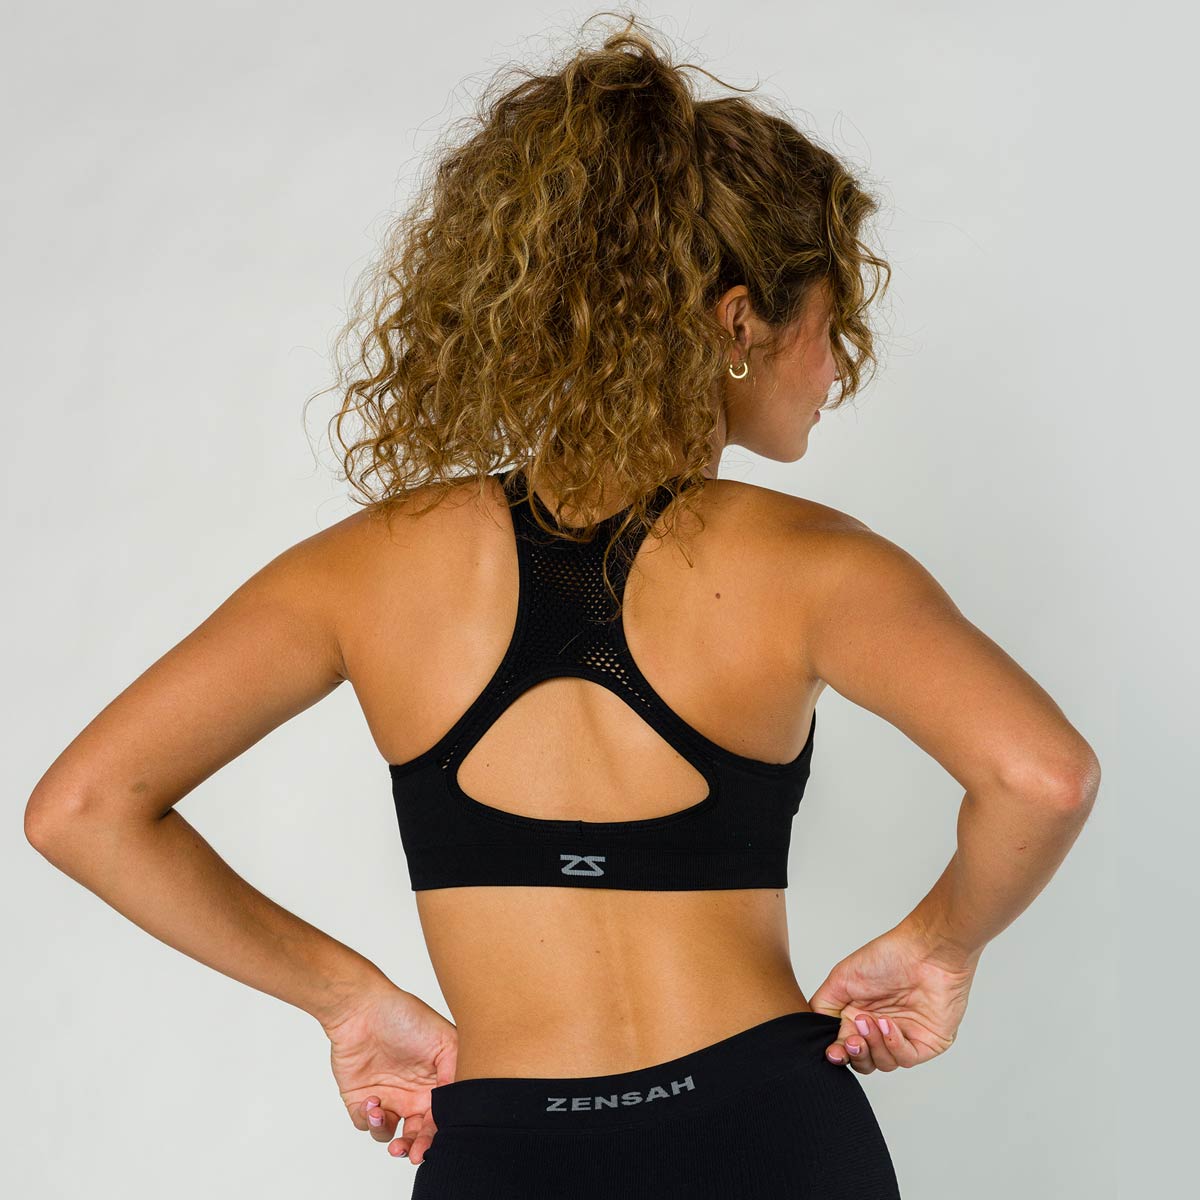 Buy A.B Crew Sports Bra for Women U-Back Yoga Top Built-in Pads